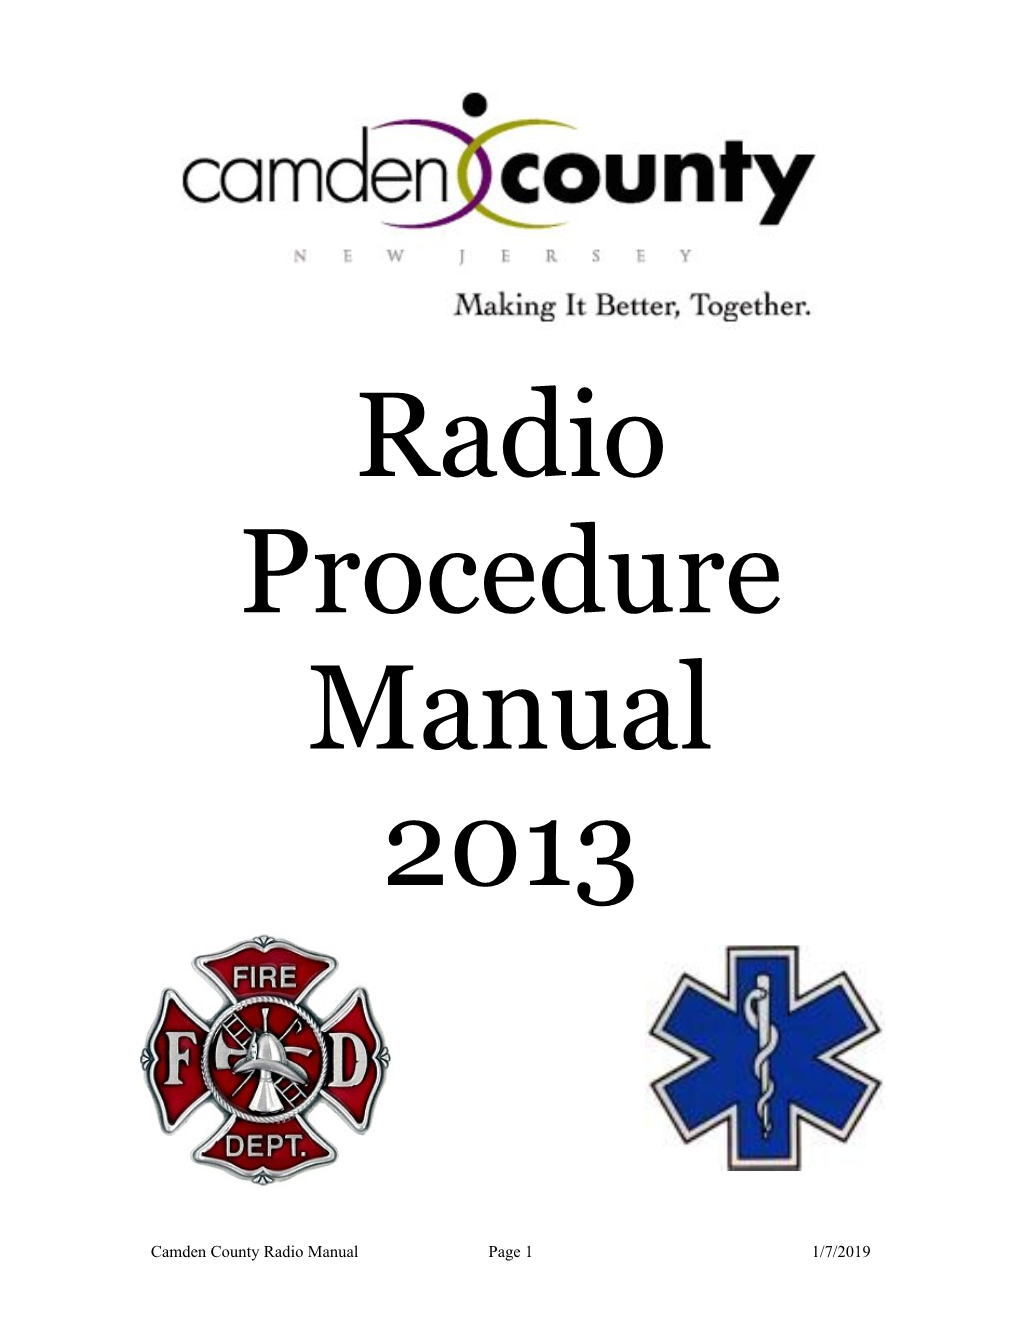 Radio Procedure Manual